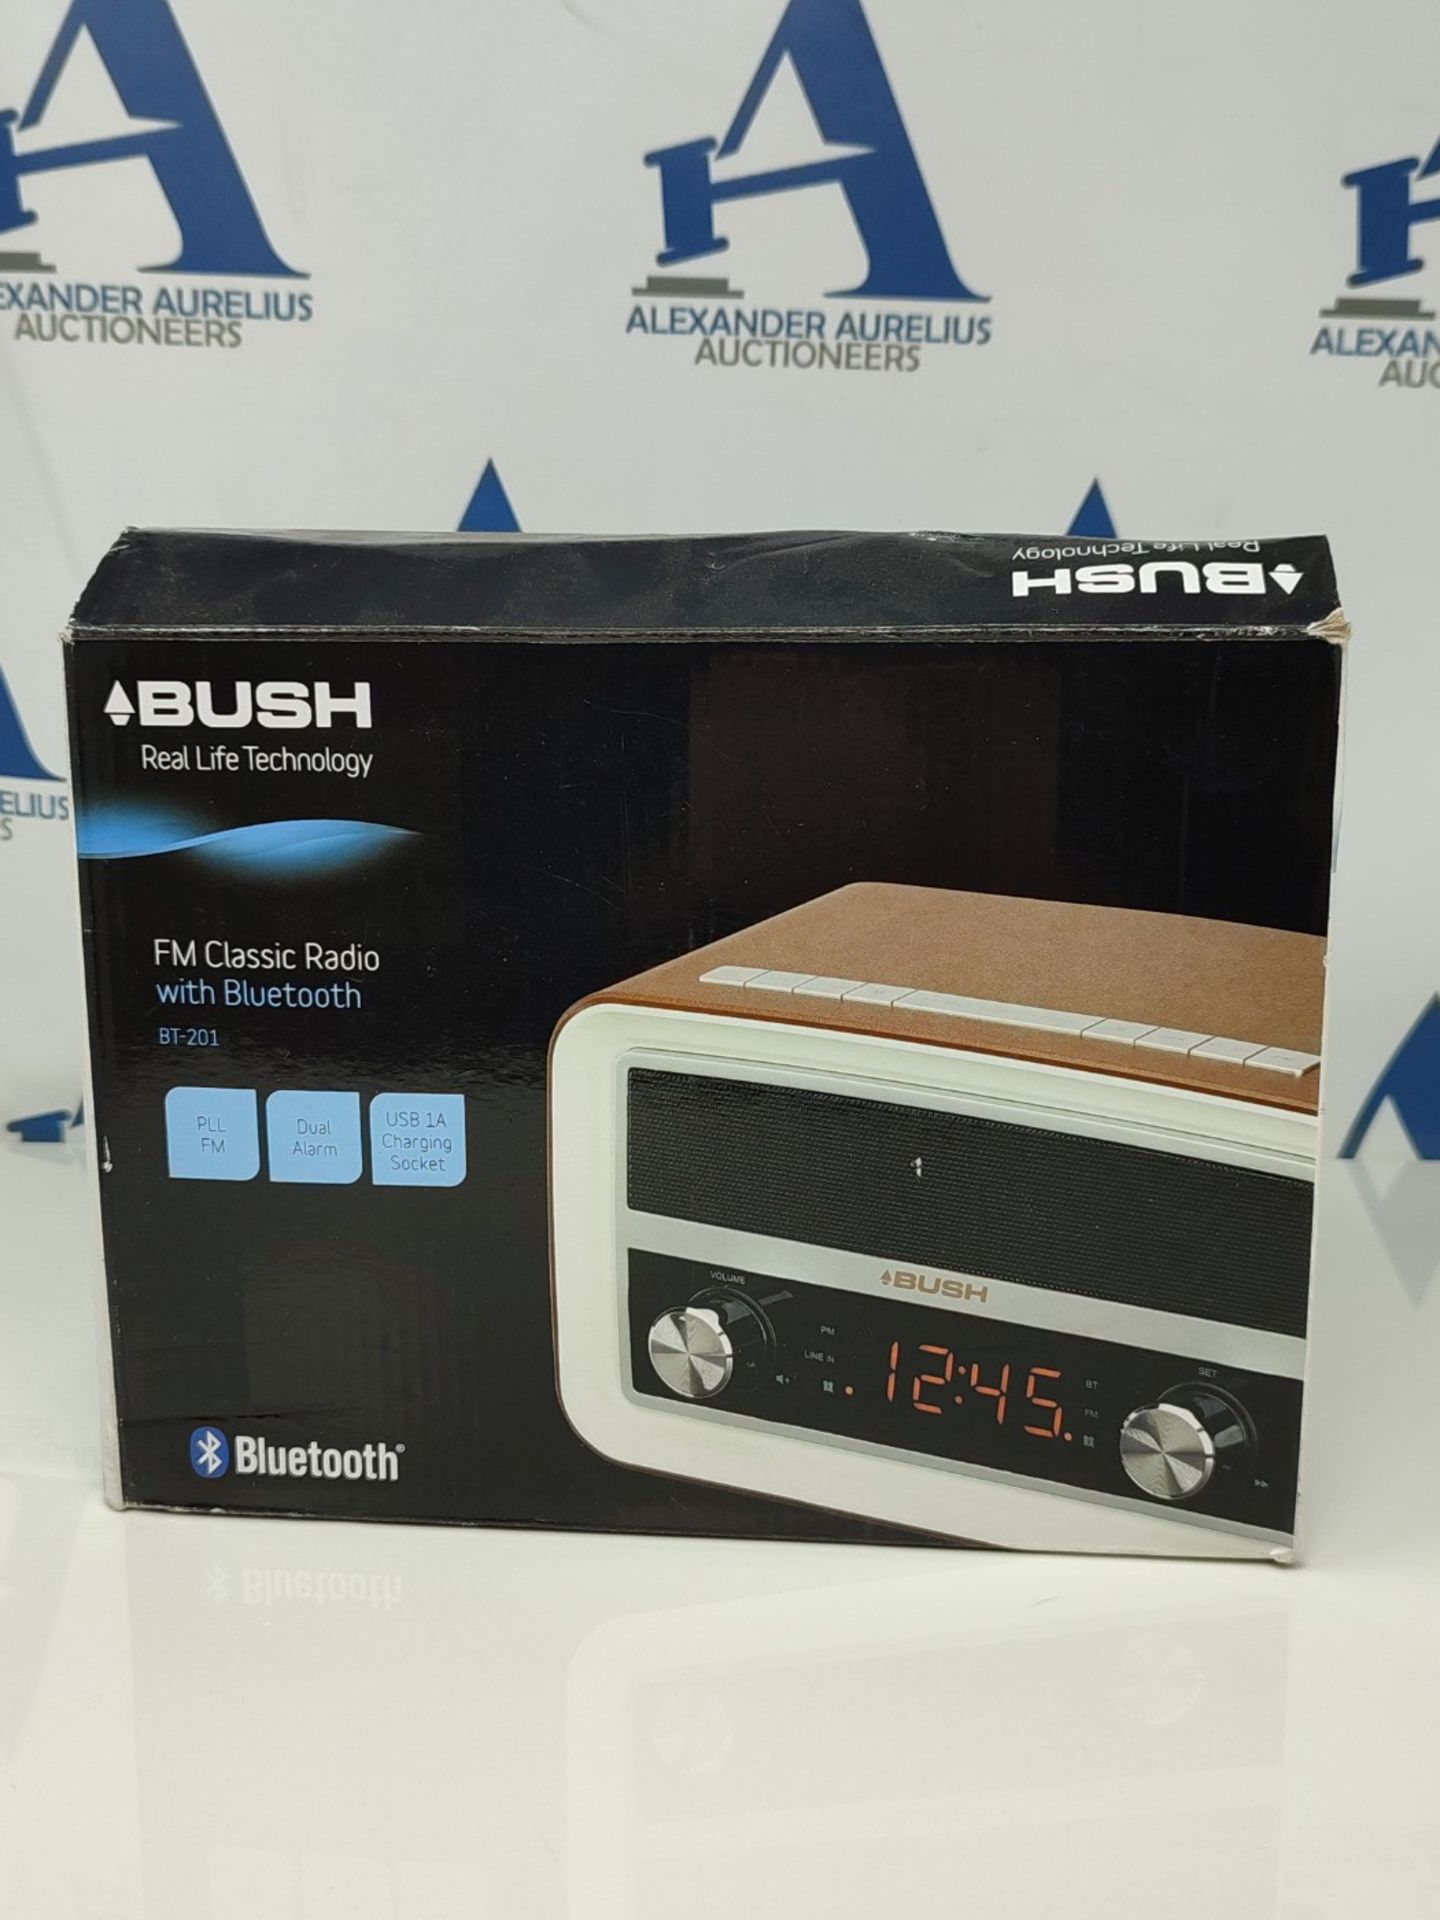 Bush model no. BT-201 FM classic radio with bluetooth - Image 2 of 3